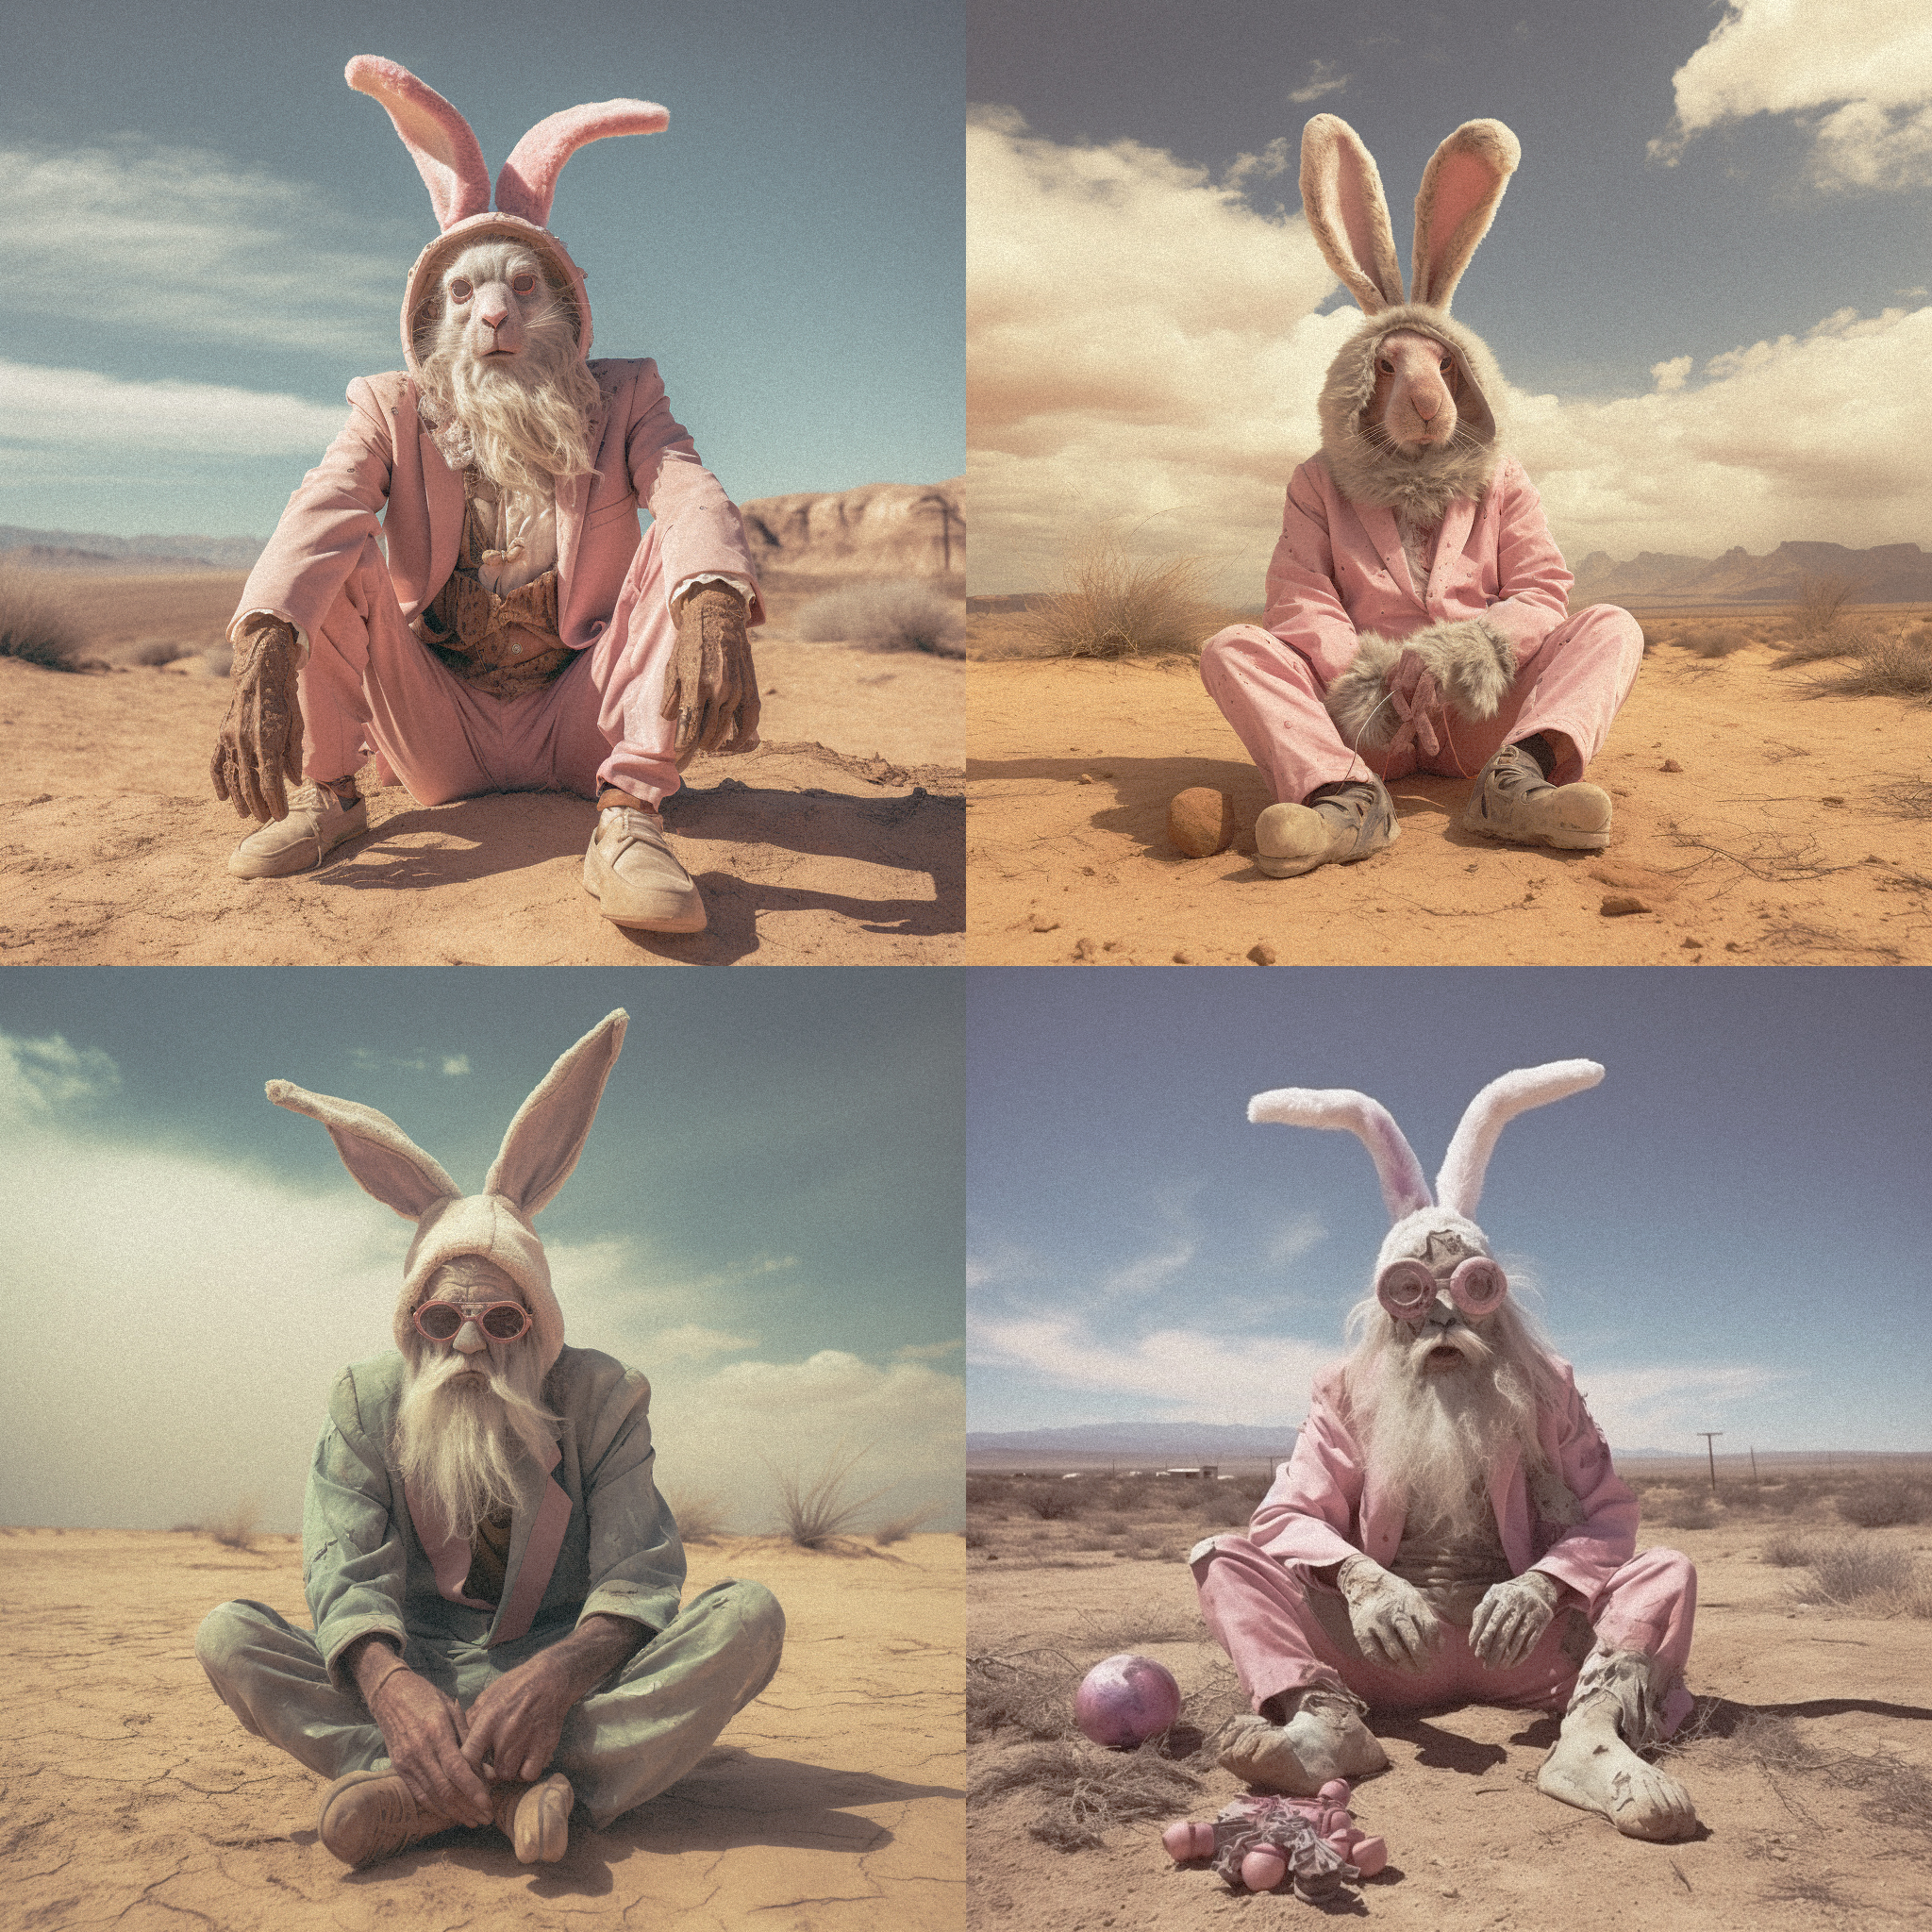 candiman_old_man_in_bunny_suit_in_a_desert_3d31a7f4-e401-41c7-93d7-69959f13de5b